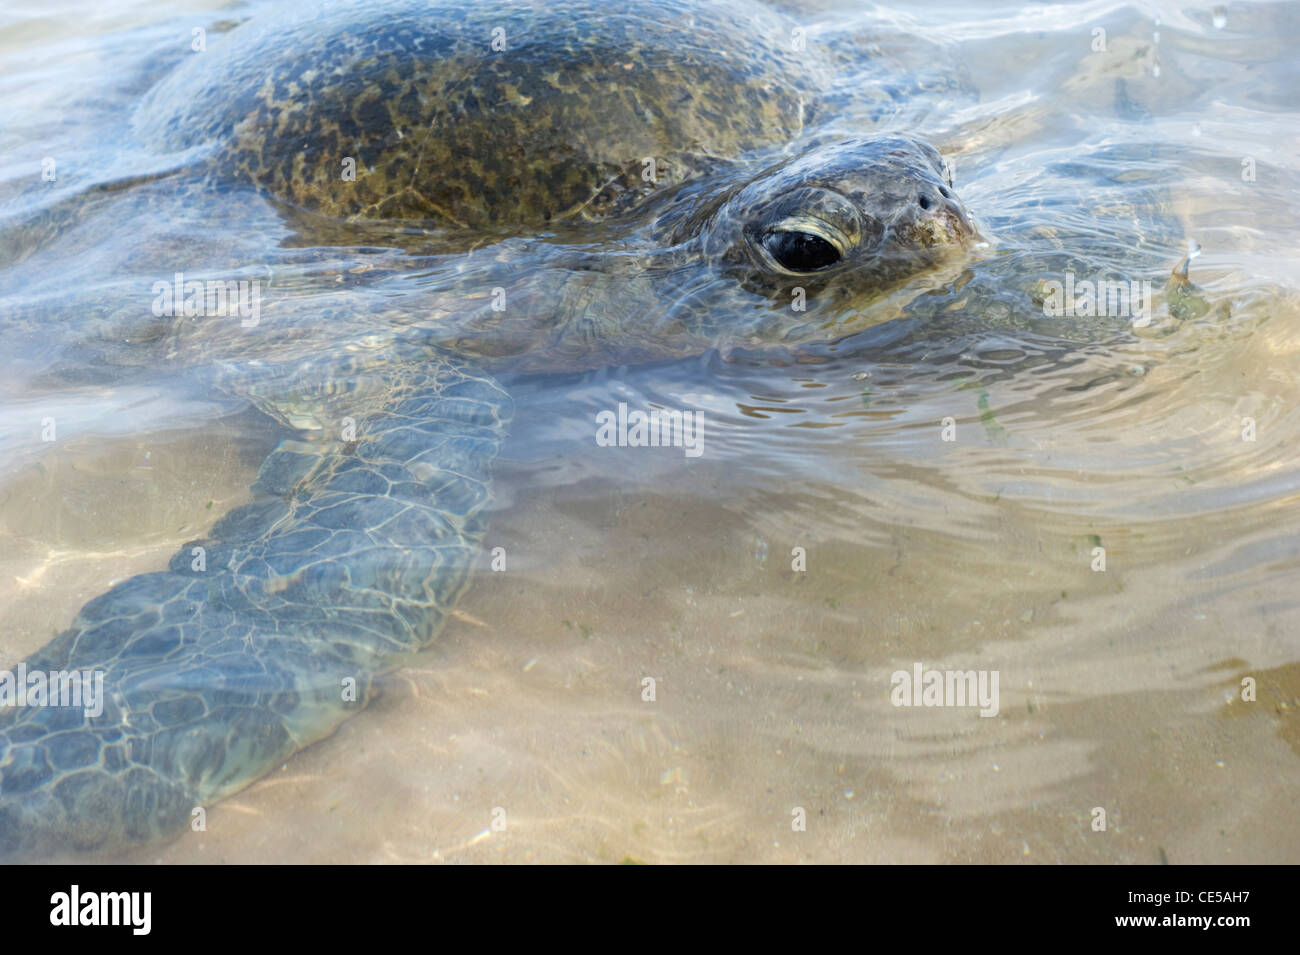 Turtle in the ocean Stock Photo